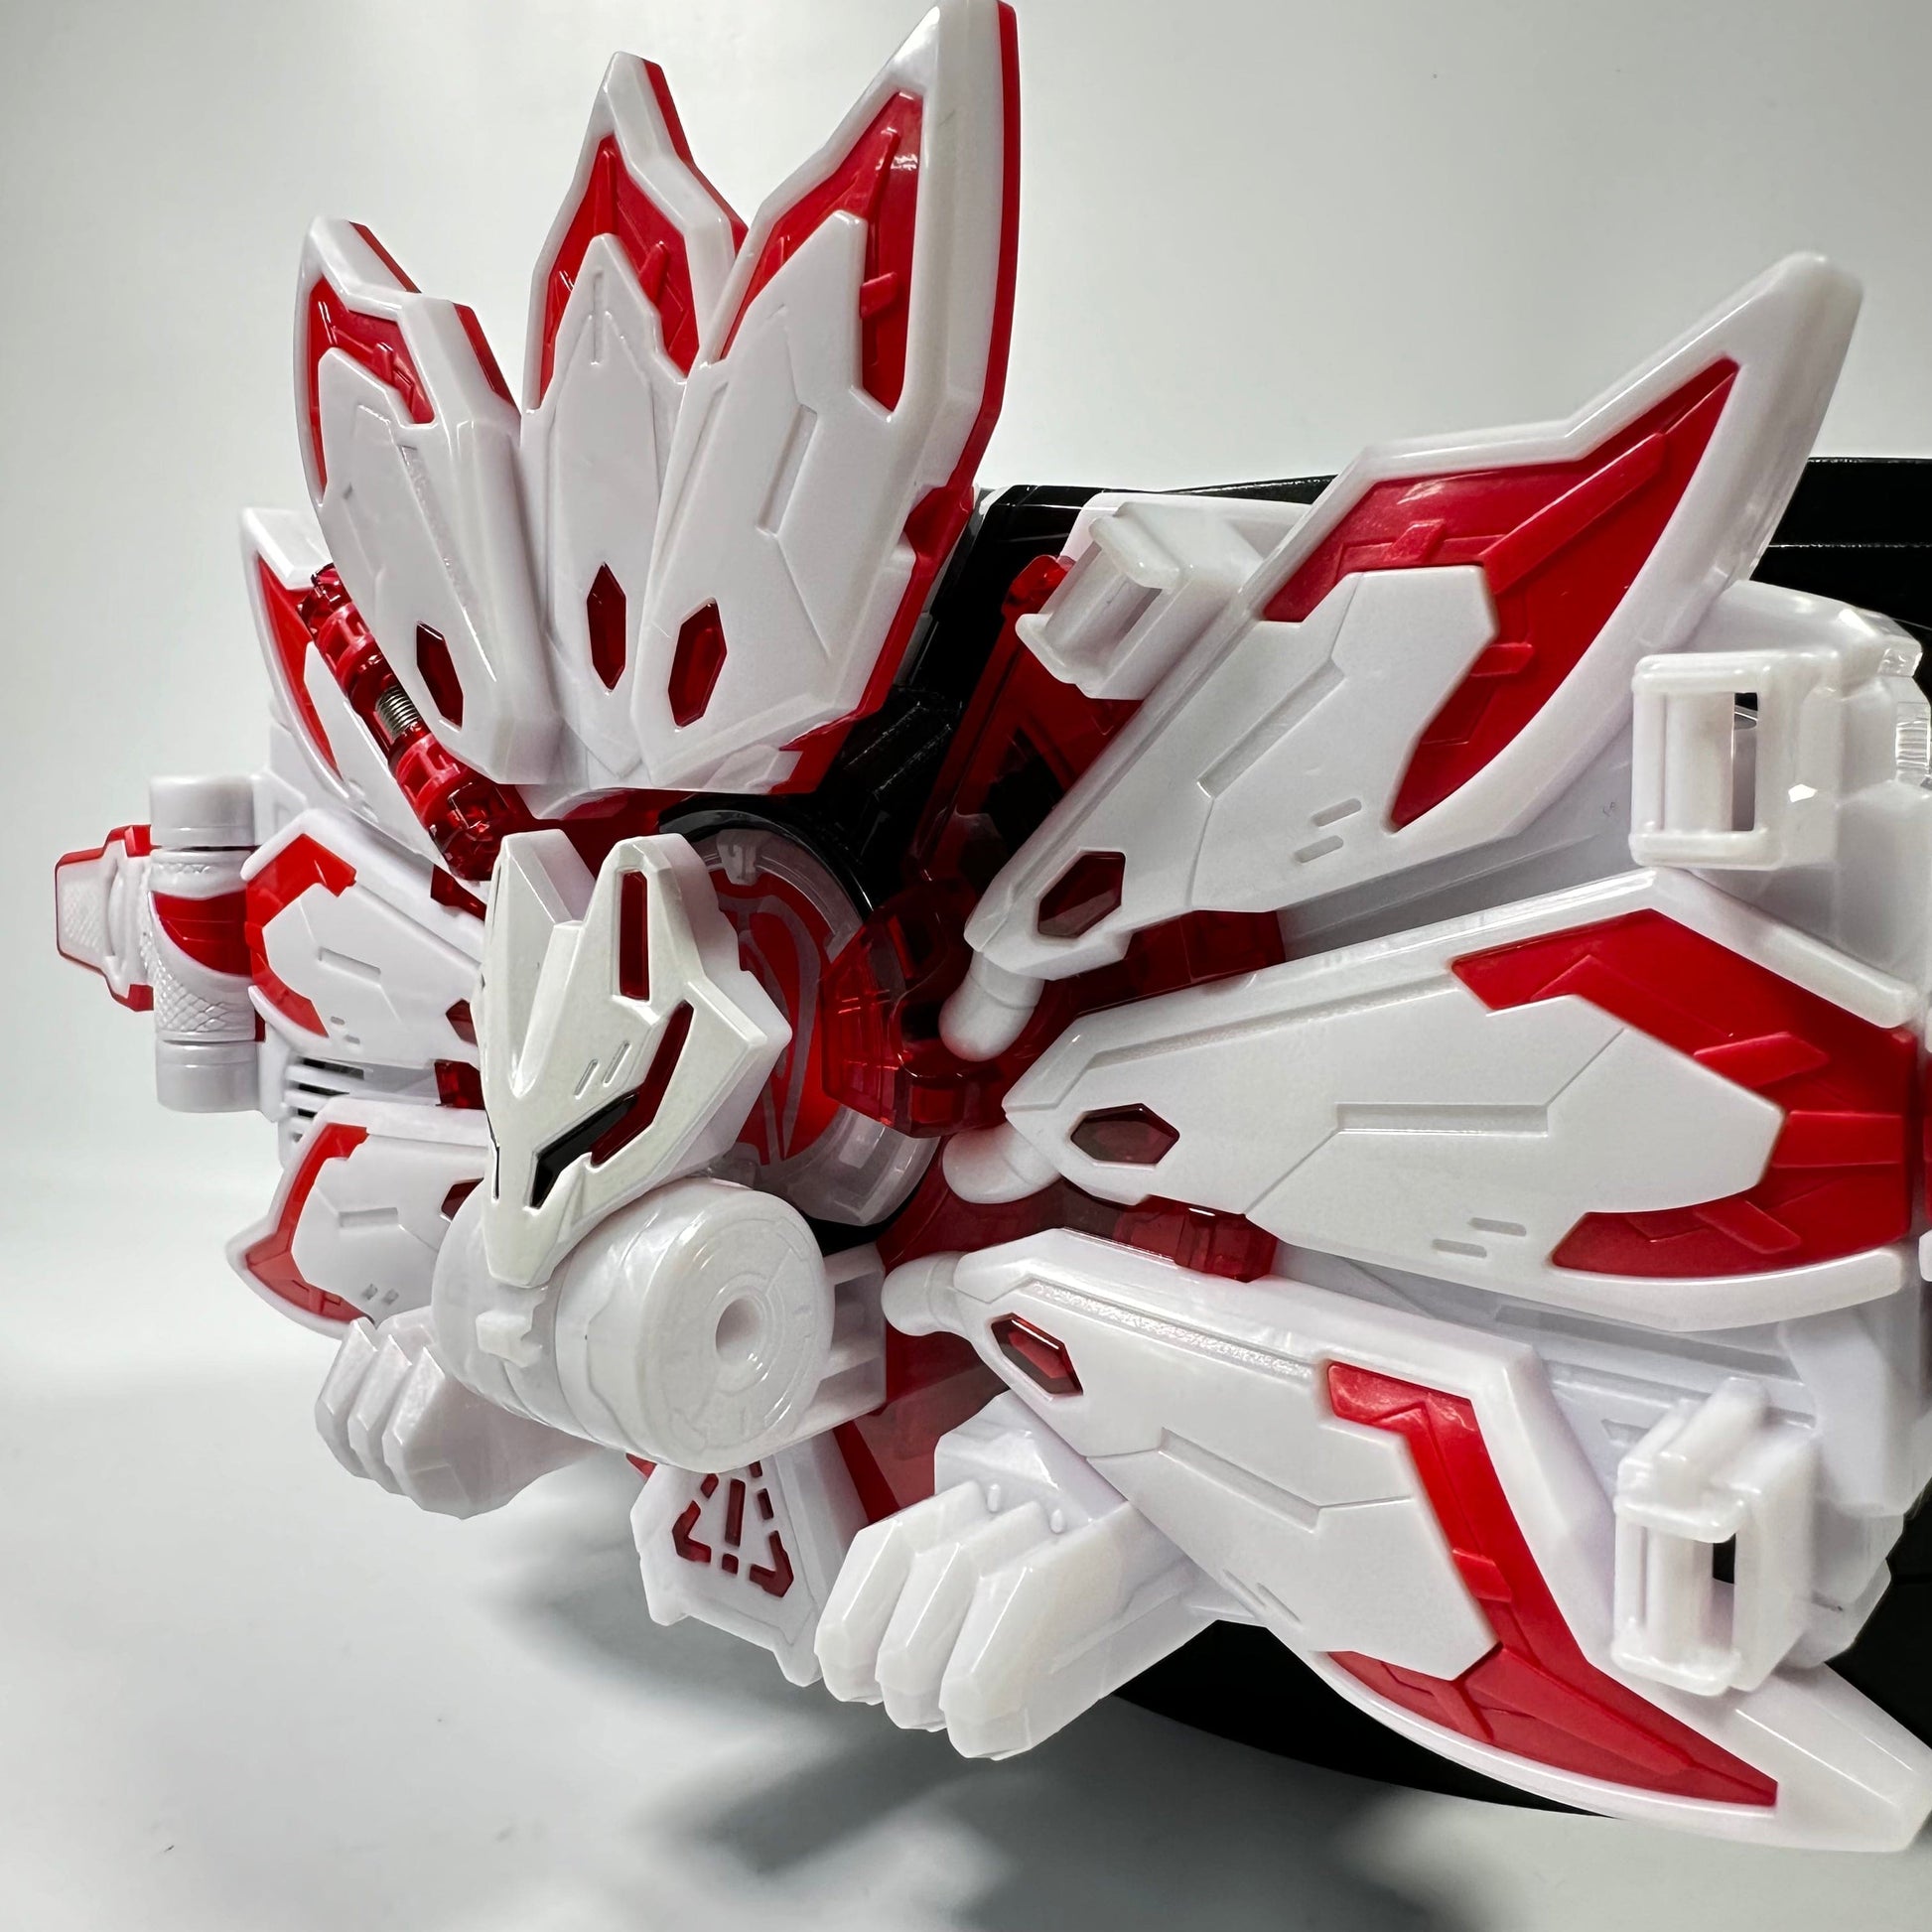 [LOOSE] Kamen Rider Geats: DX Boost Mark IX Raise Buckle | CSTOYS INTERNATIONAL